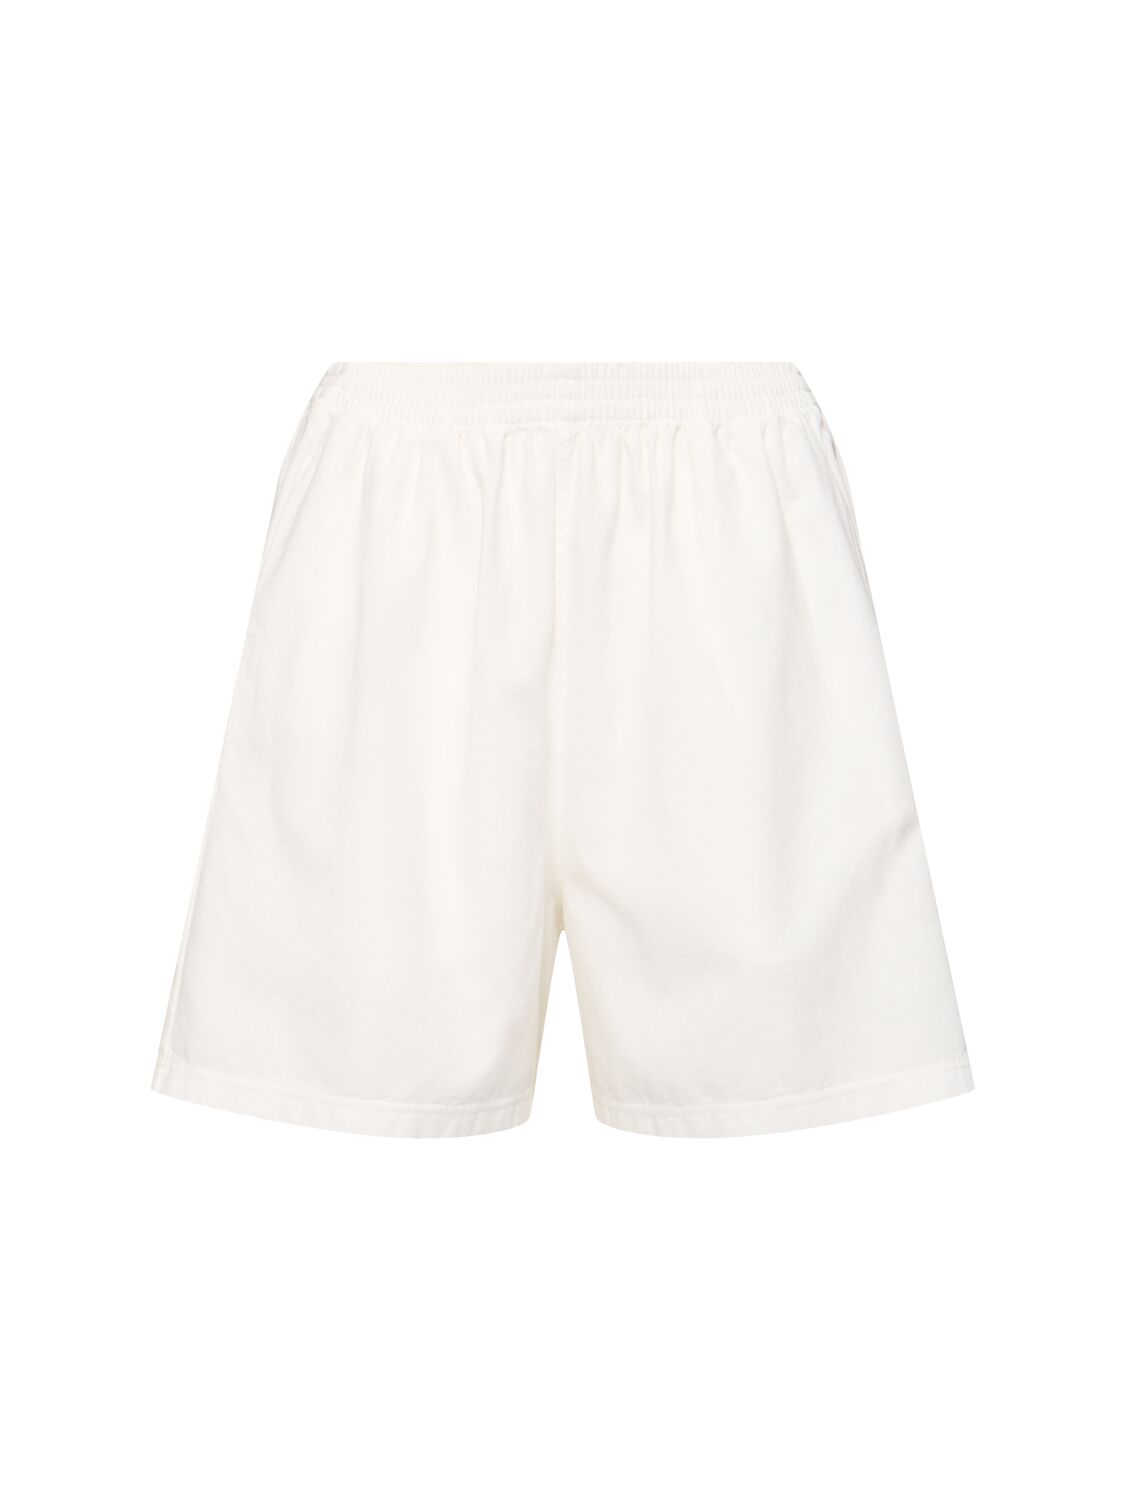 Image of Gunty Cotton Jersey Shorts